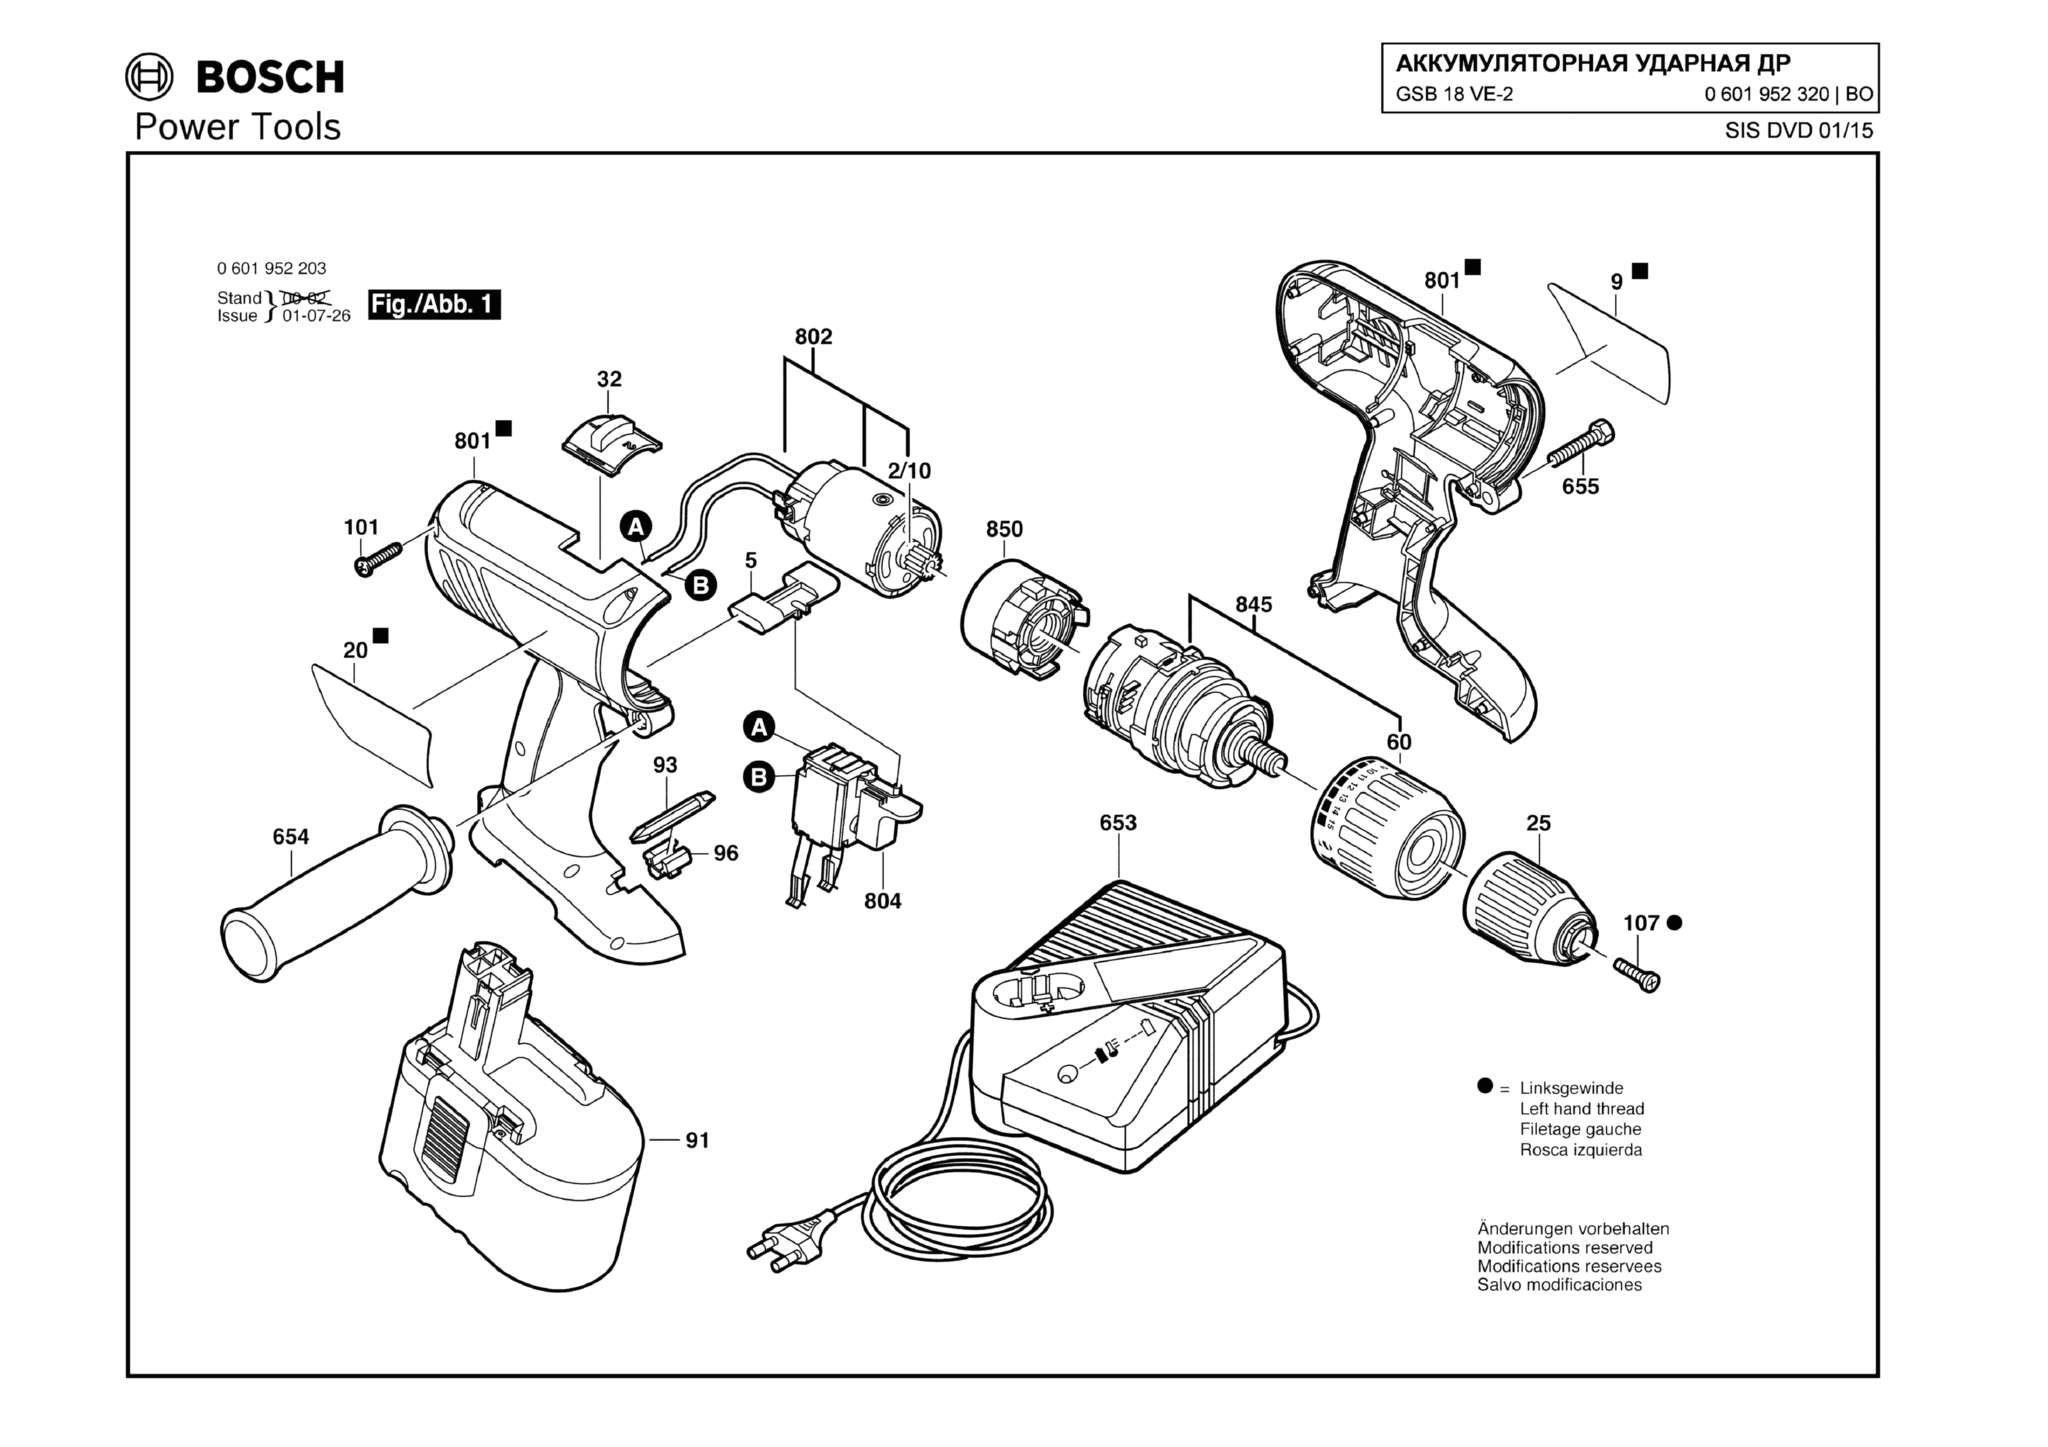 Запчасти, схема и деталировка Bosch GSB 18 VE-2 (ТИП 0601952320)